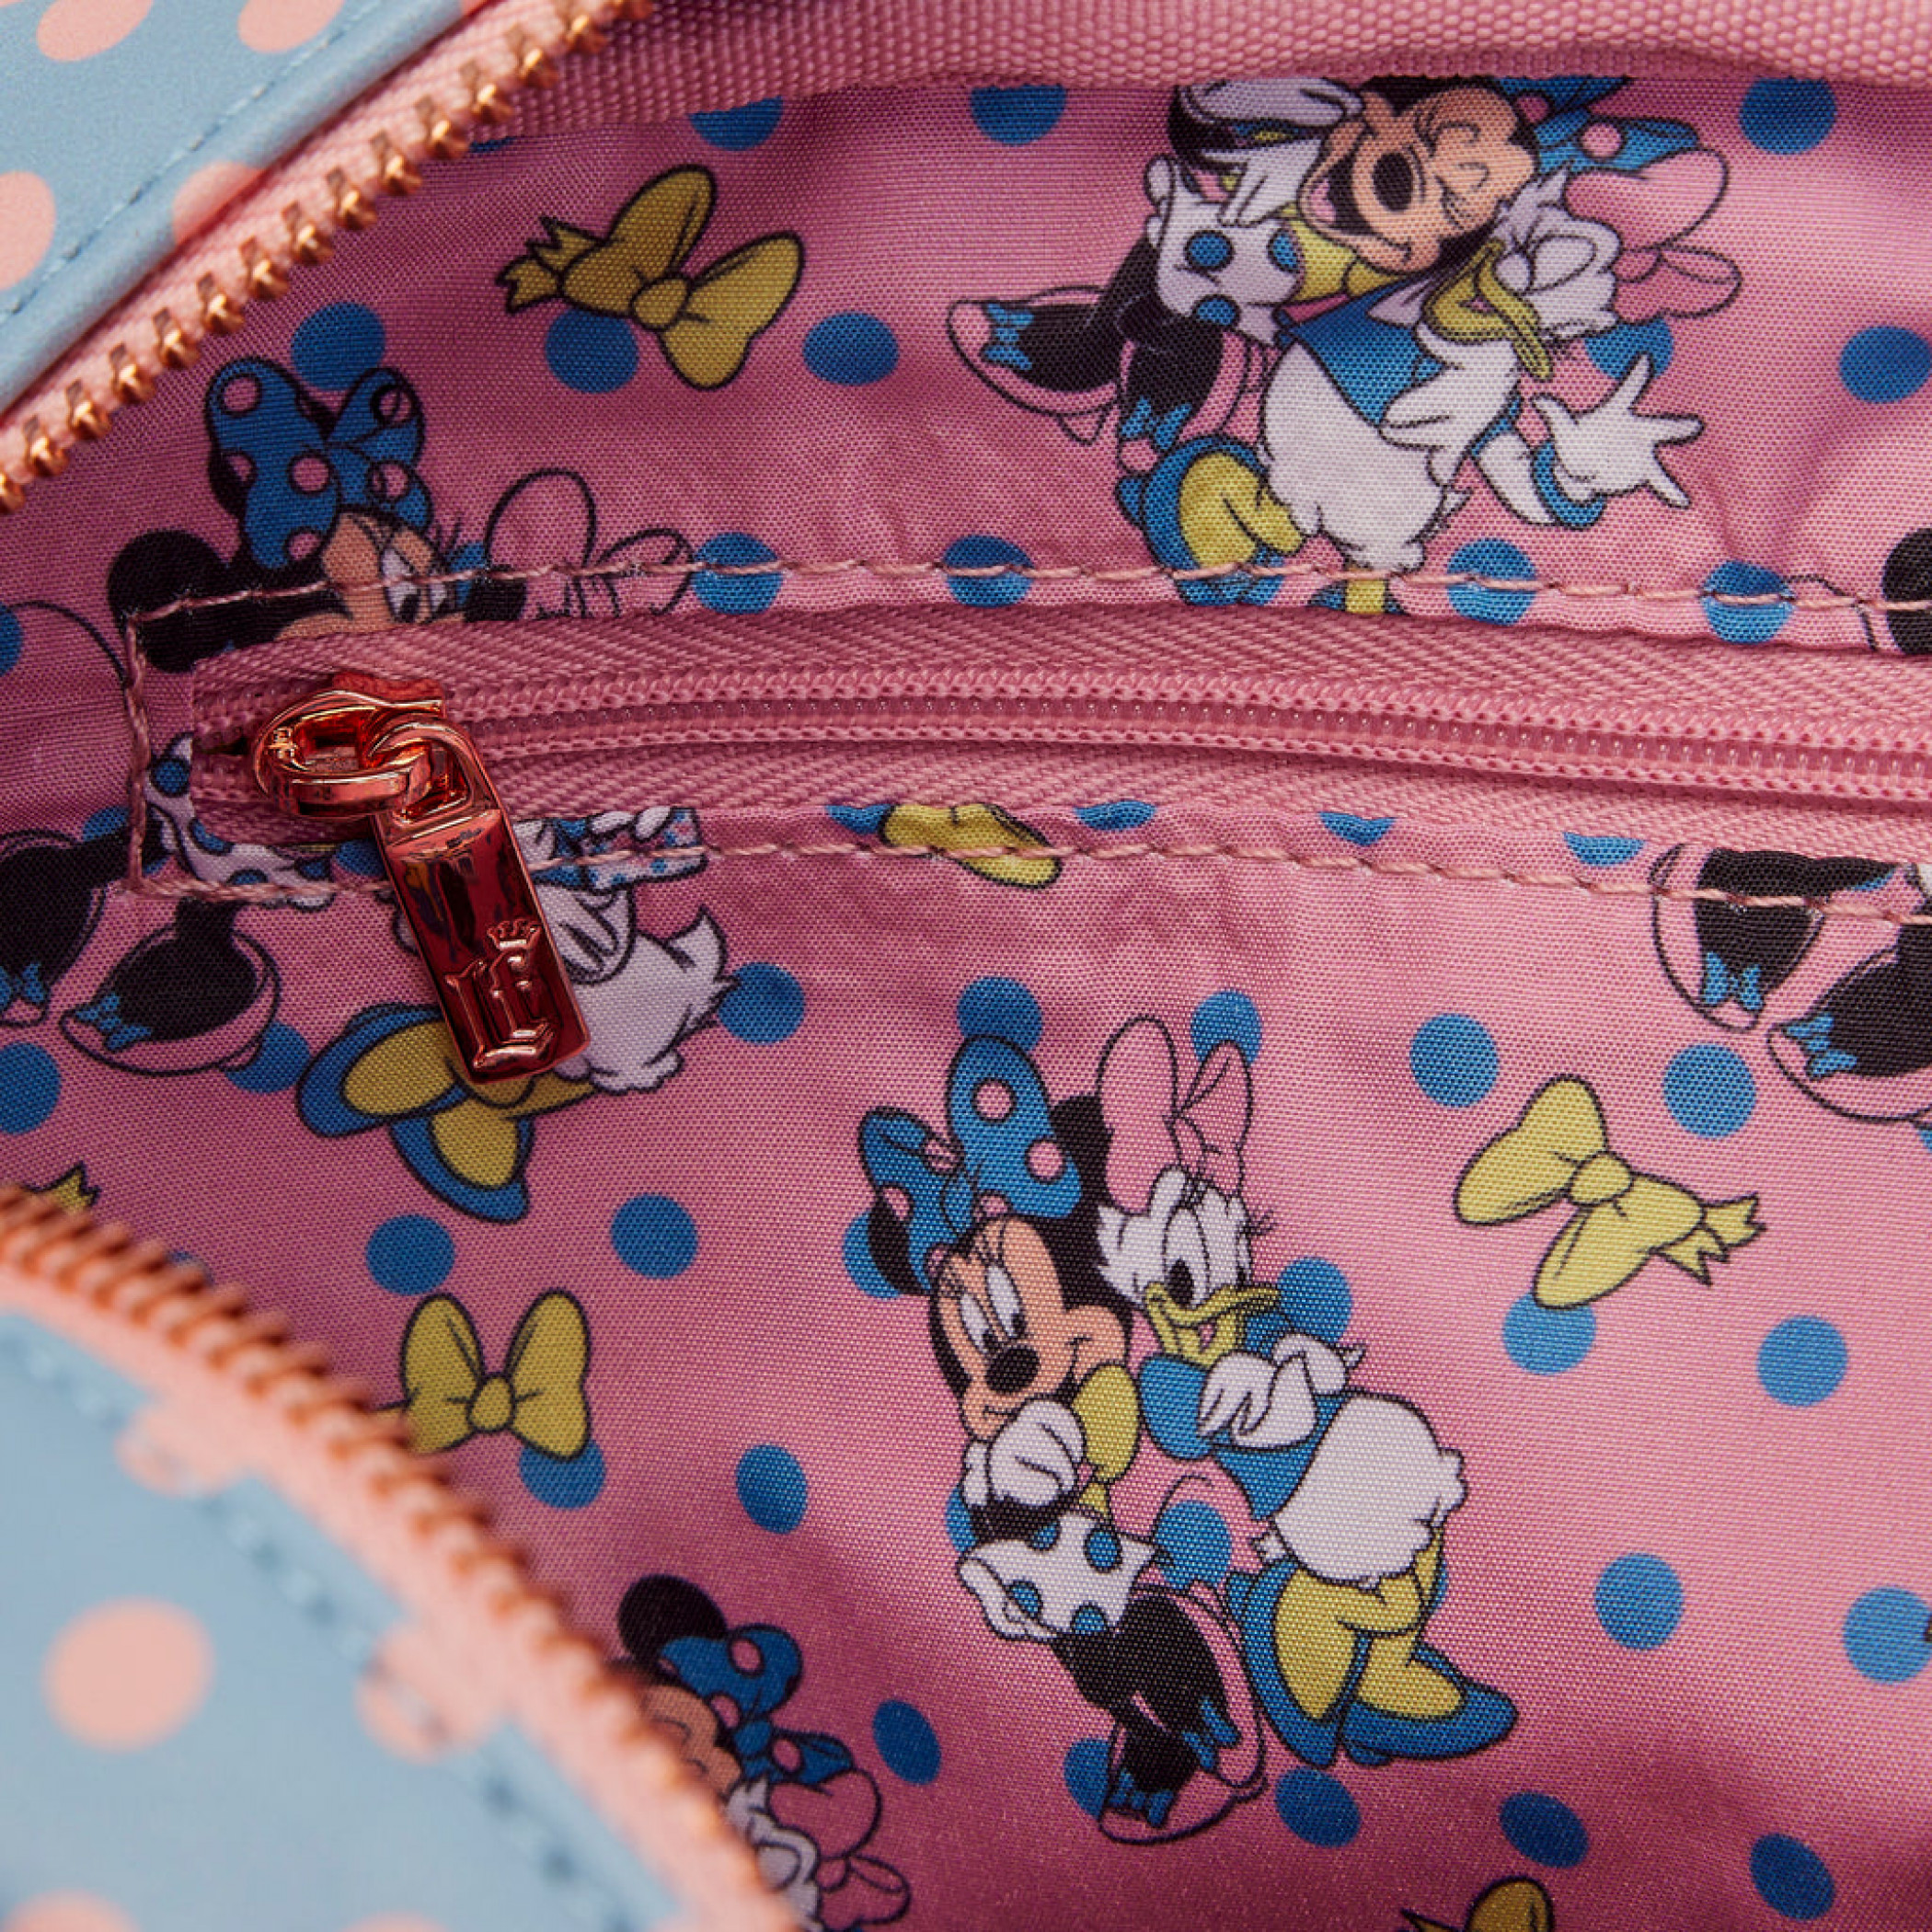 Disney Minnie Mouse Big Bow Crossbody Bag by Loungefly